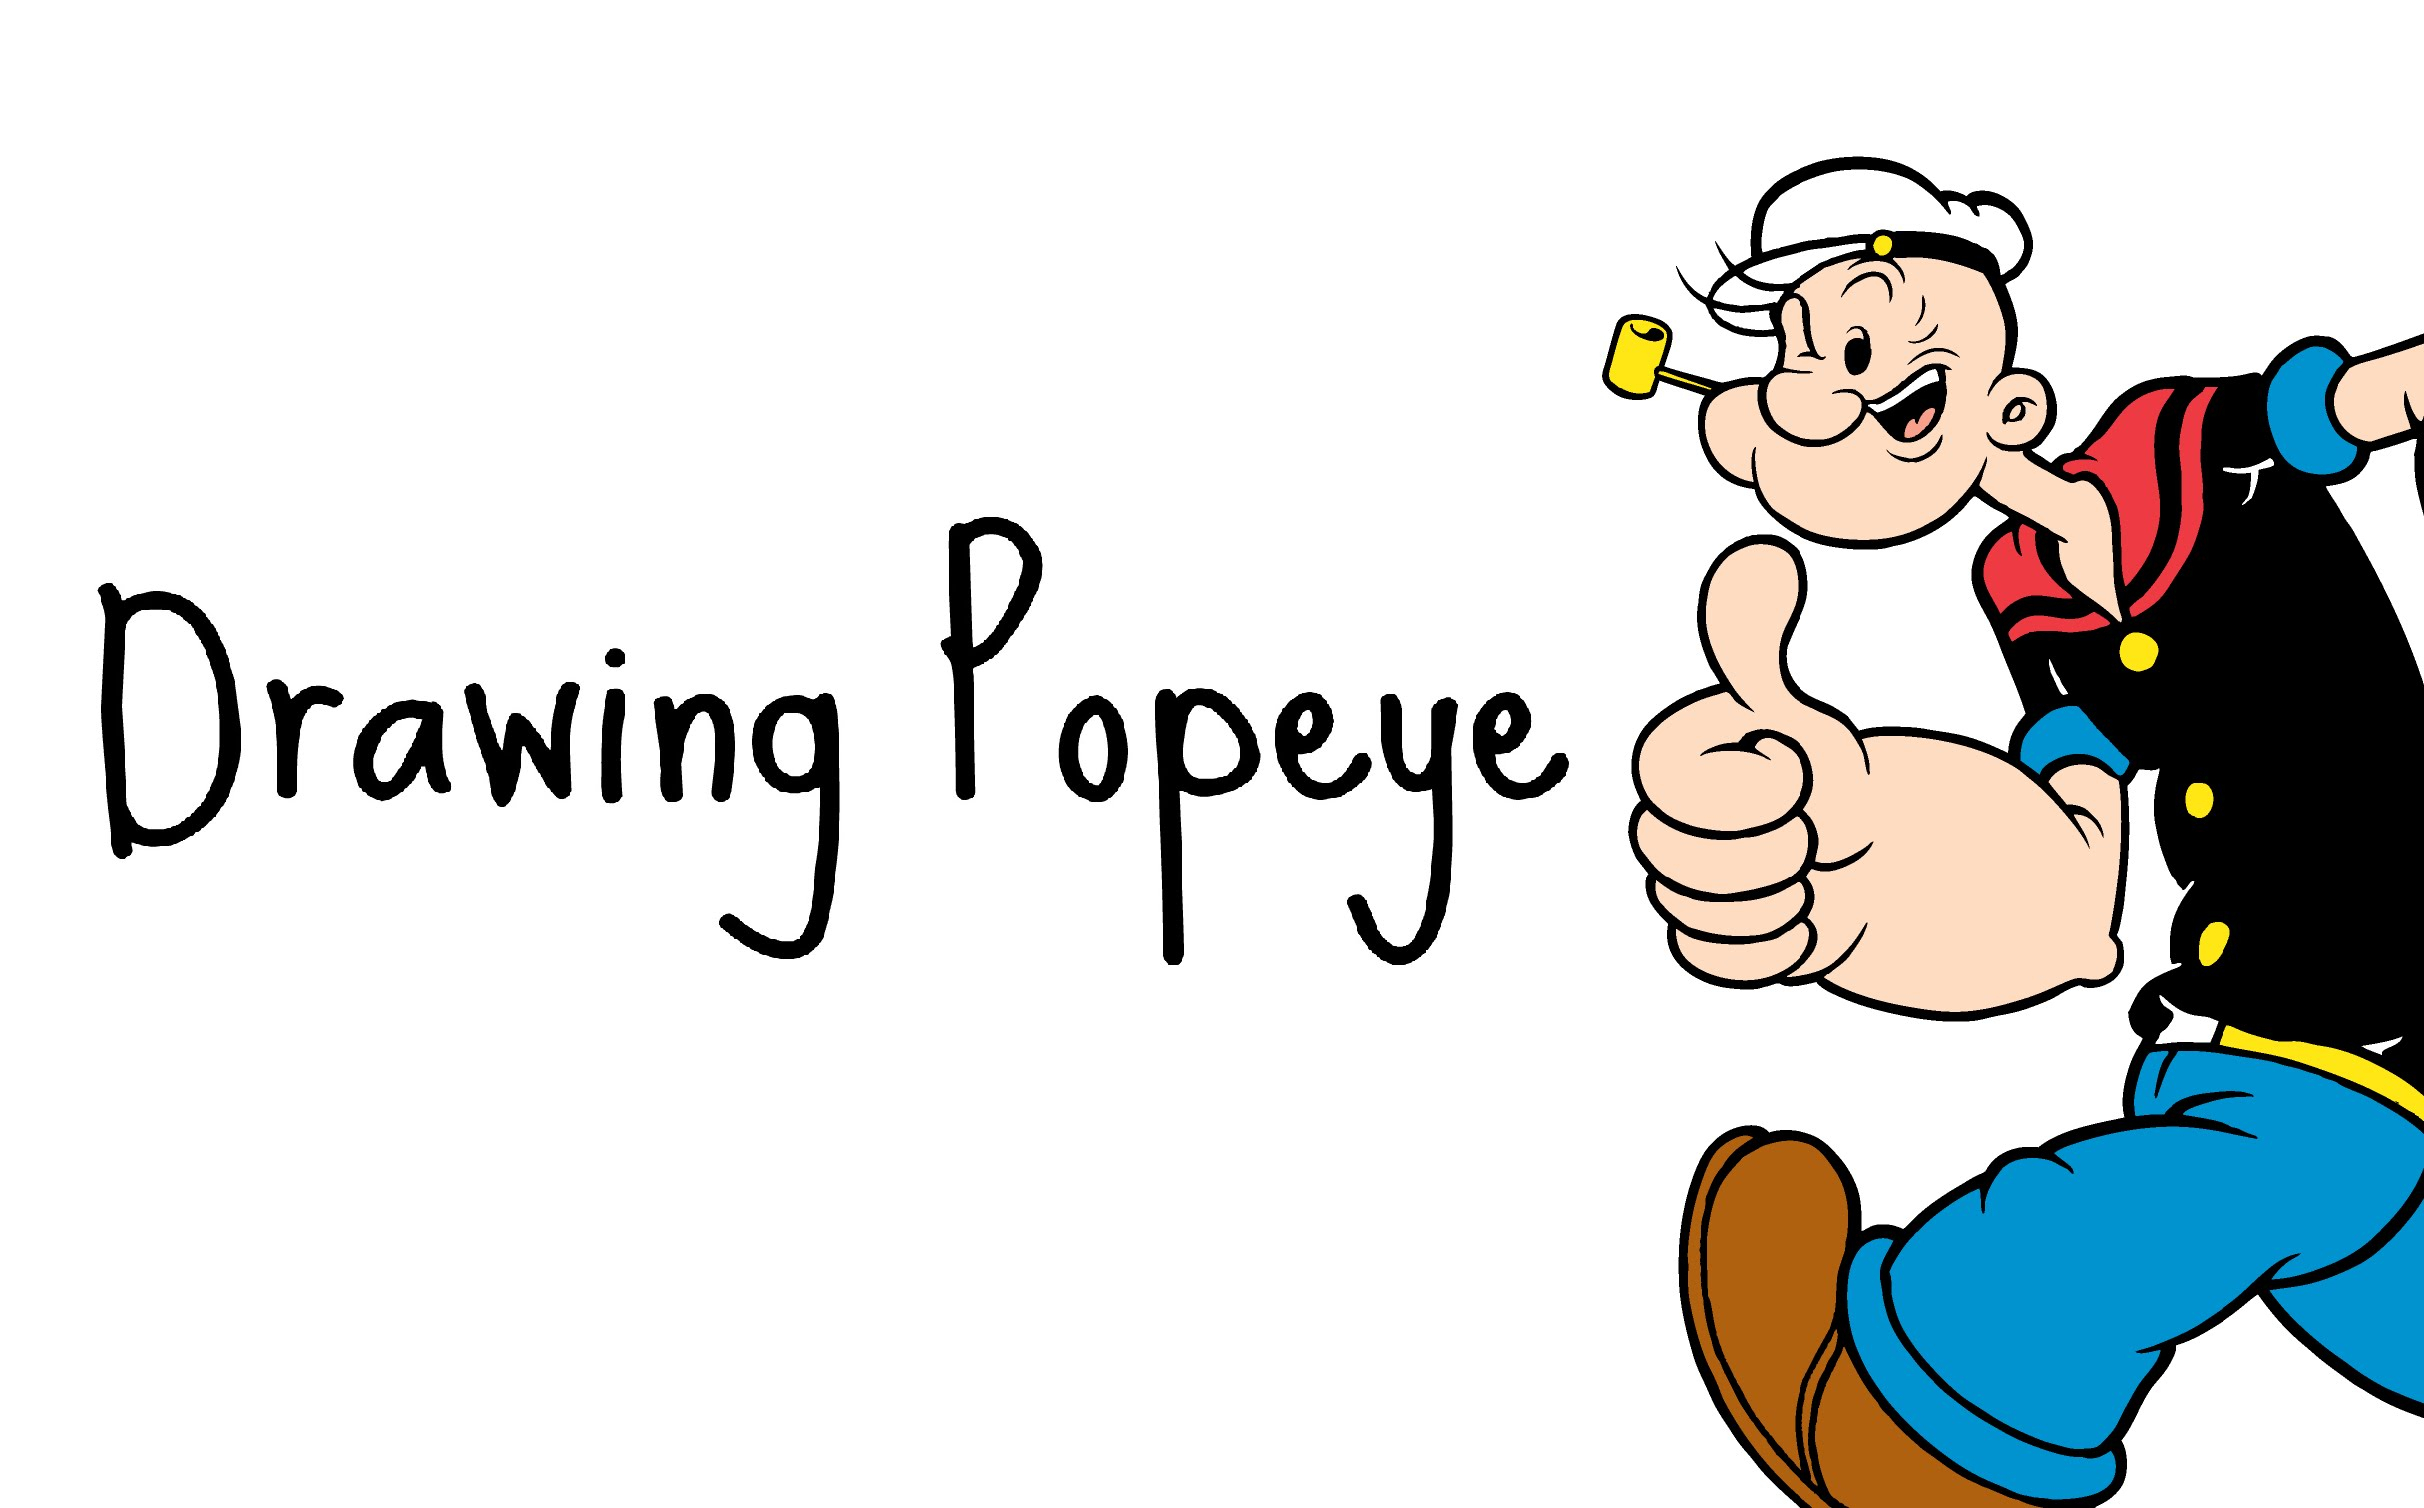 Popeye Cartoon Drawings Drawing Popeye - Popeye Cartoon Drawing. 